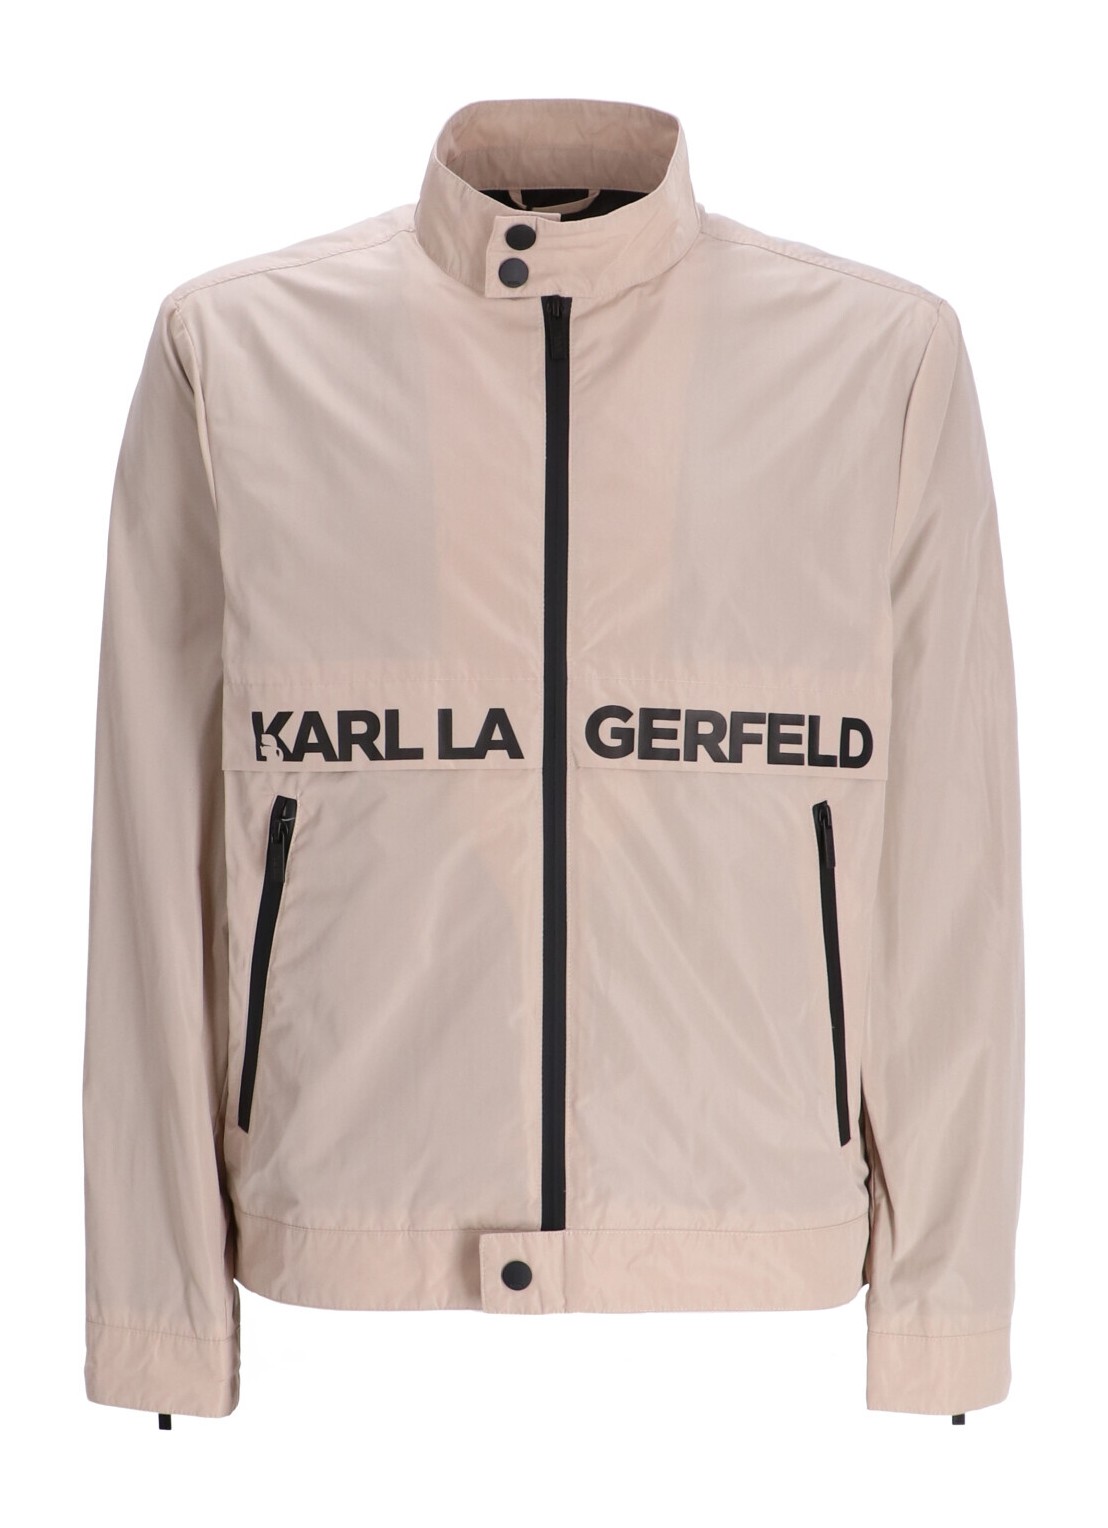 Outerwear karl lagerfeld outerwear man jacket 505081541501 410 talla marron
 